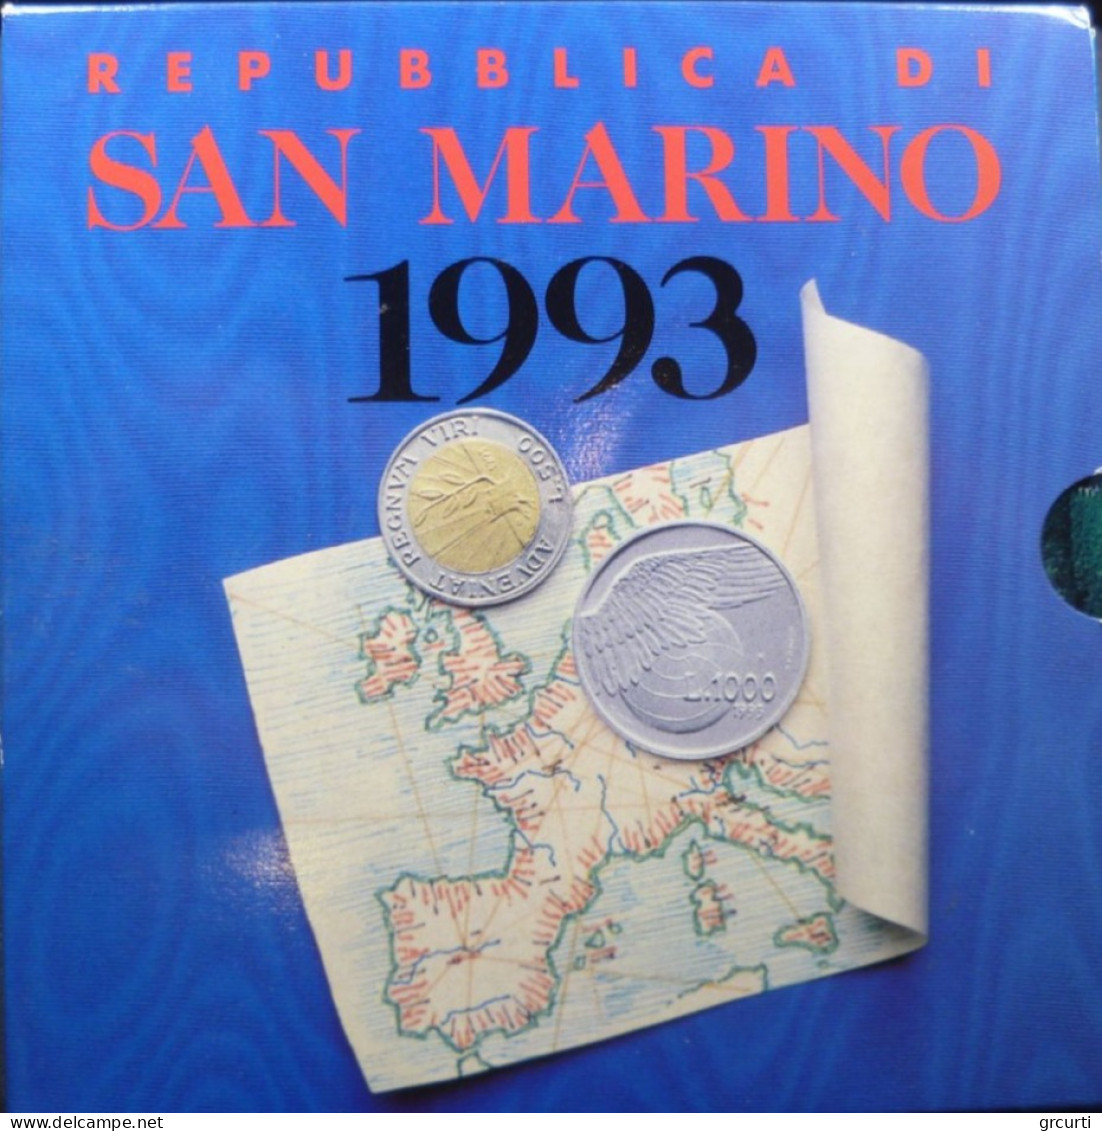 San Marino - 1993 - Serie Divisionale - Gig. 251 - Saint-Marin